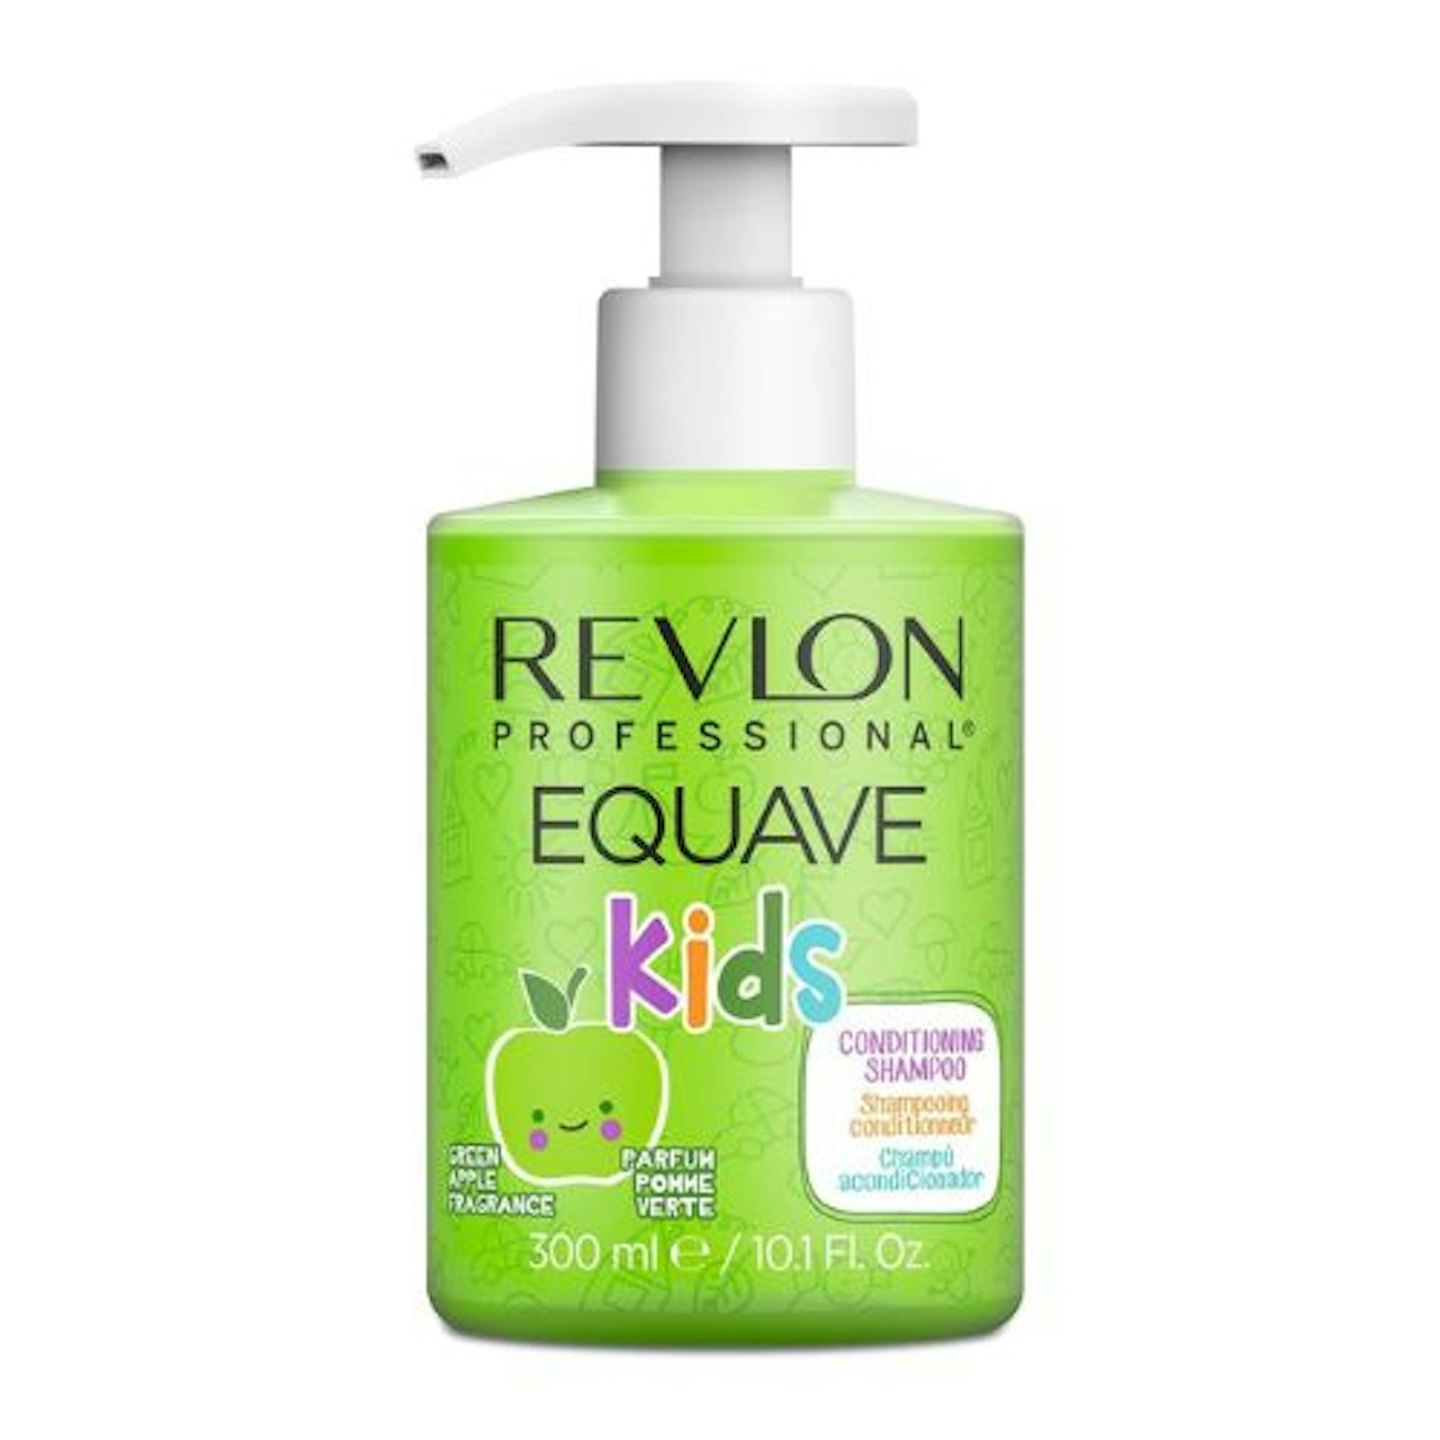 Revlon Professional Equave Kids Conditioning Shampoo